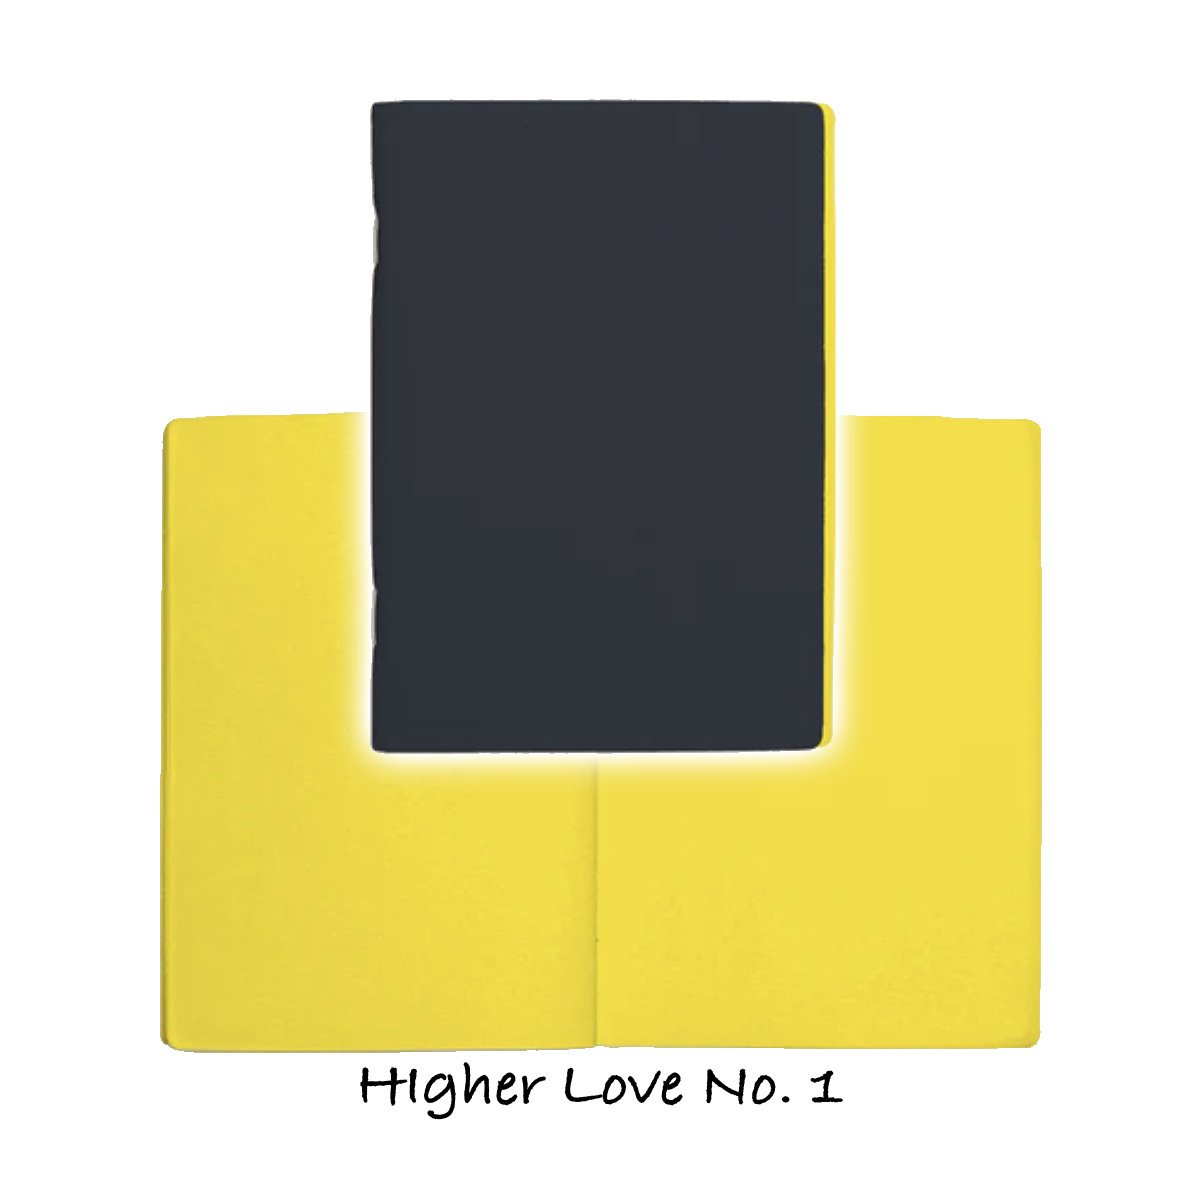 Uglybooks - Higher Love No. 1 - Single Notebook - Notegeist